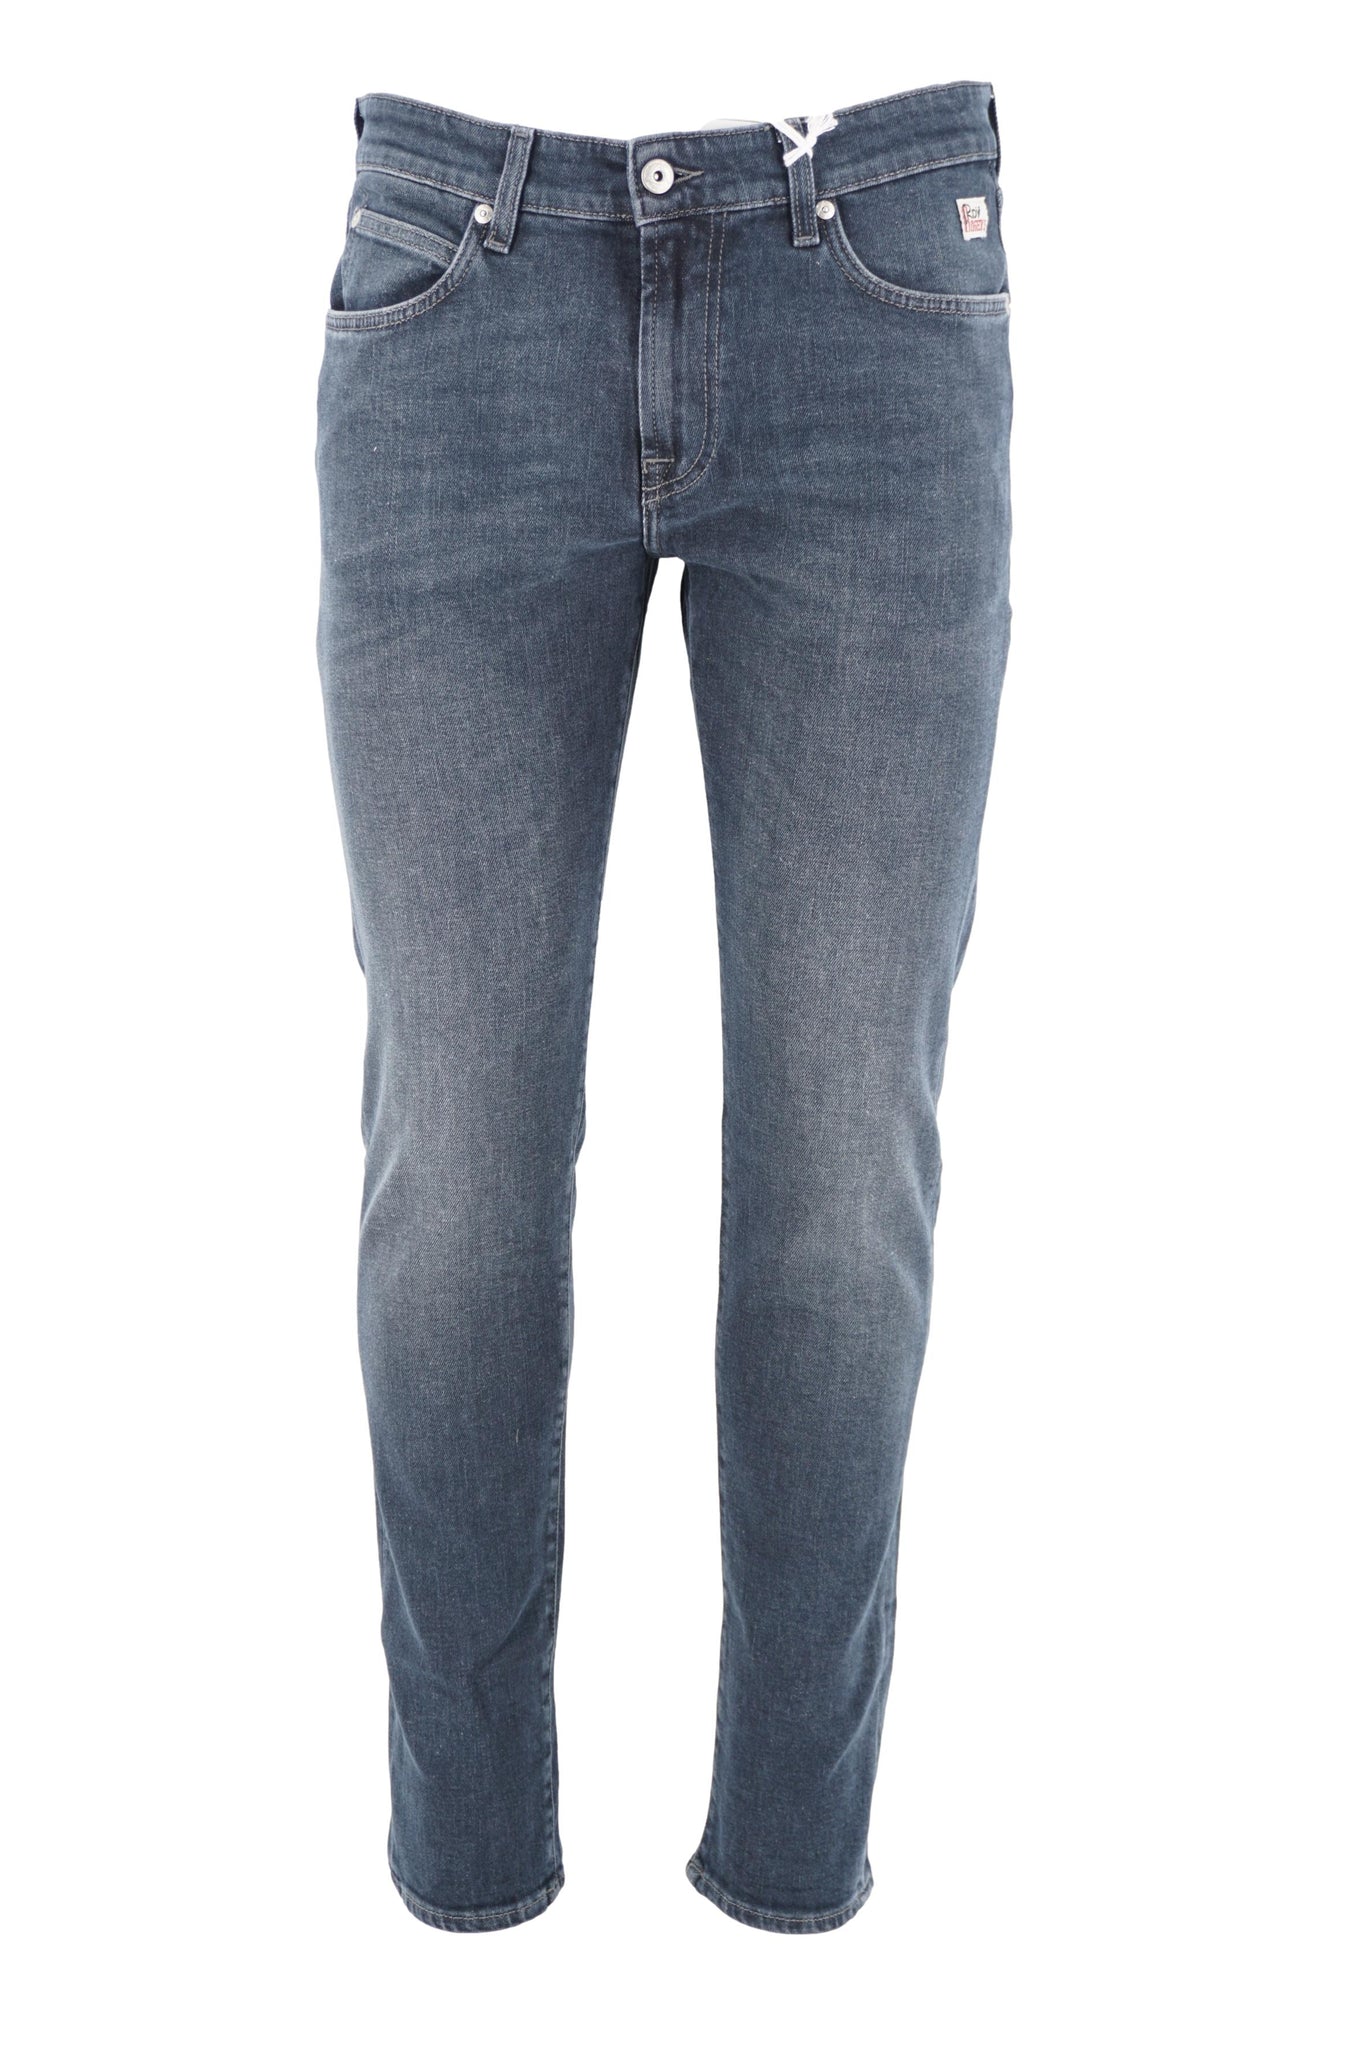 Jeans 517 Cinque Tasche / Jeans - Ideal Moda